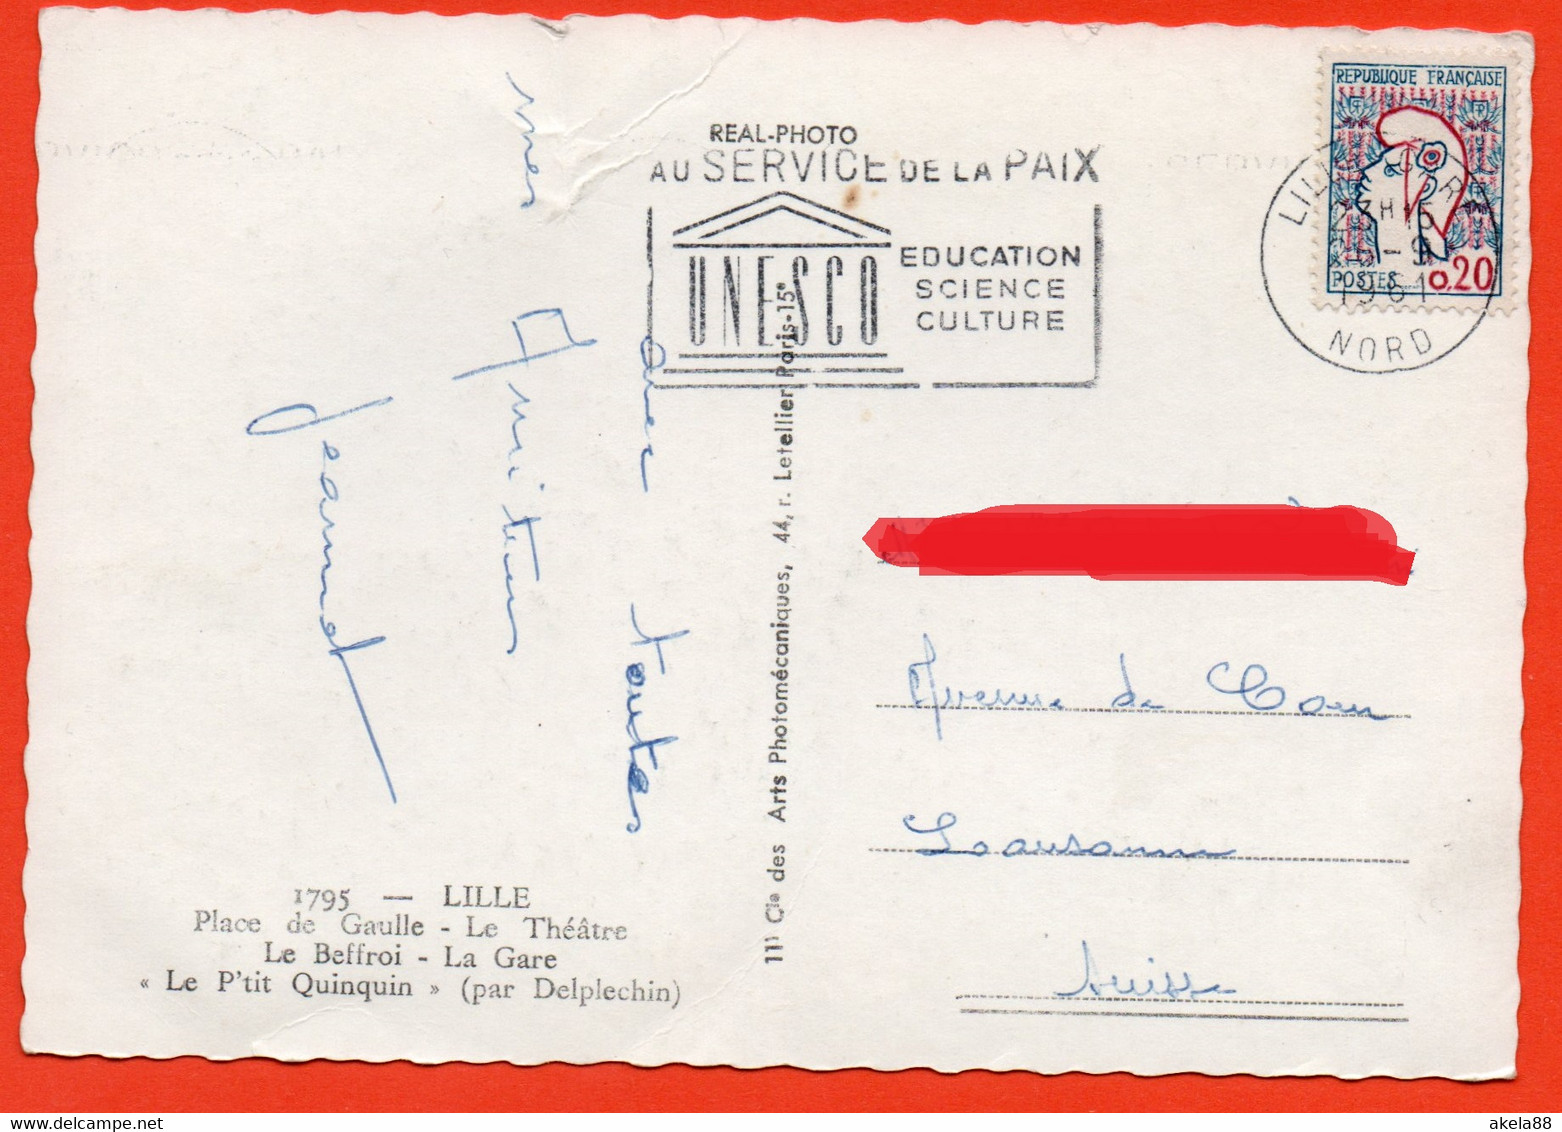 FRANCIA 1961 - MARIANNE DI COCTEAU TIPO I - UNESCO - LILLE PIAZZA DE GAULLE - TEATRO - BEFFROI - STAZIONE FERROVIARIA - 1961 Marianne Of Cocteau